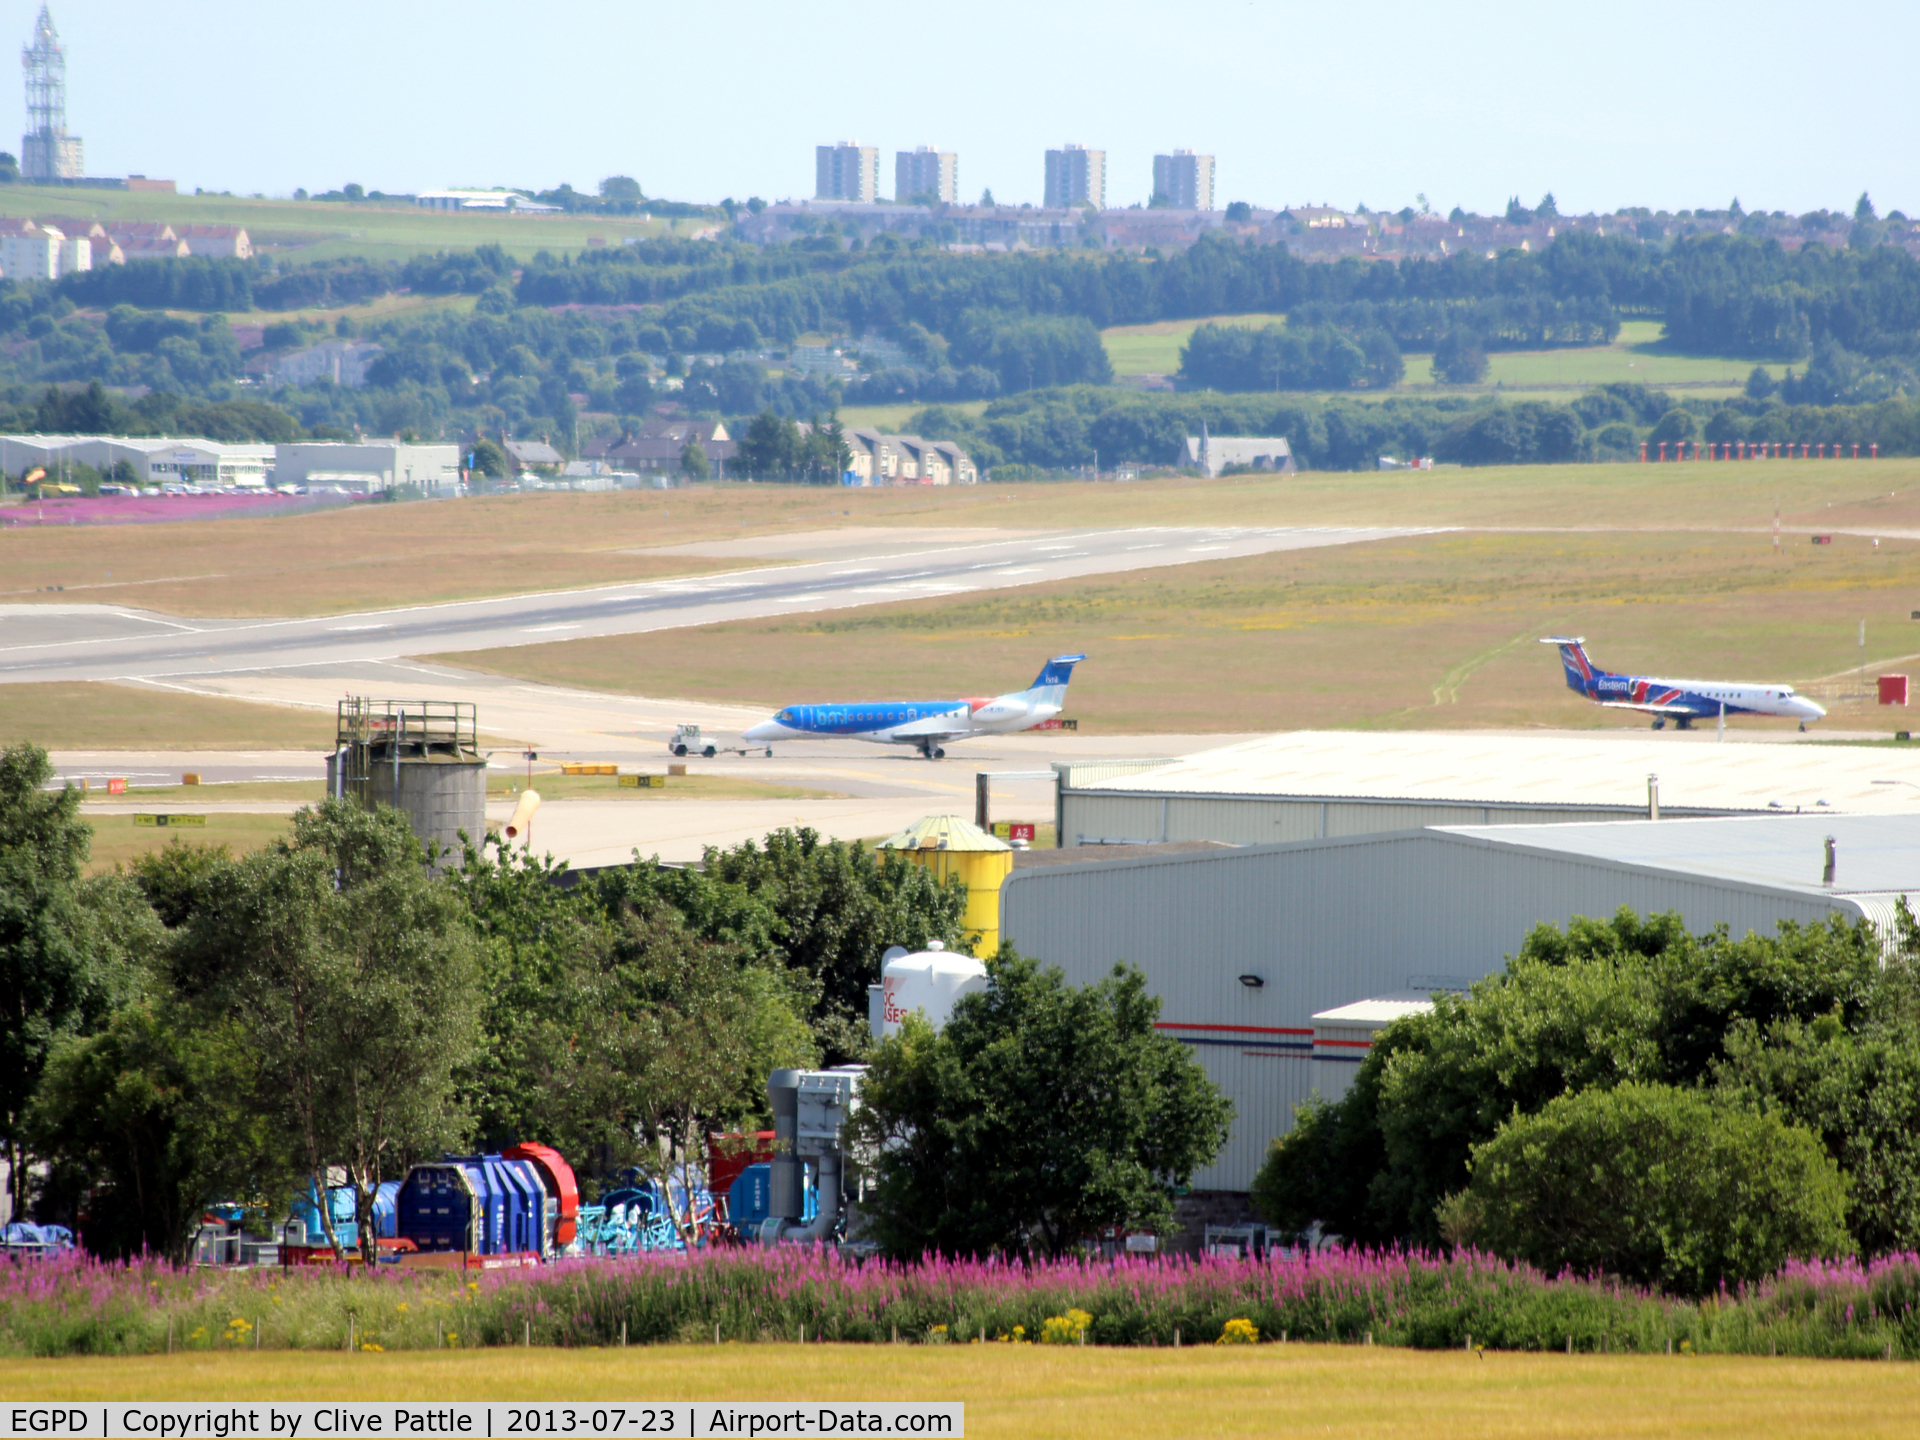 Aberdeen Airport, Aberdeen, Scotland United Kingdom (EGPD) - Airport view at EGPD Aberdeen, Scotland